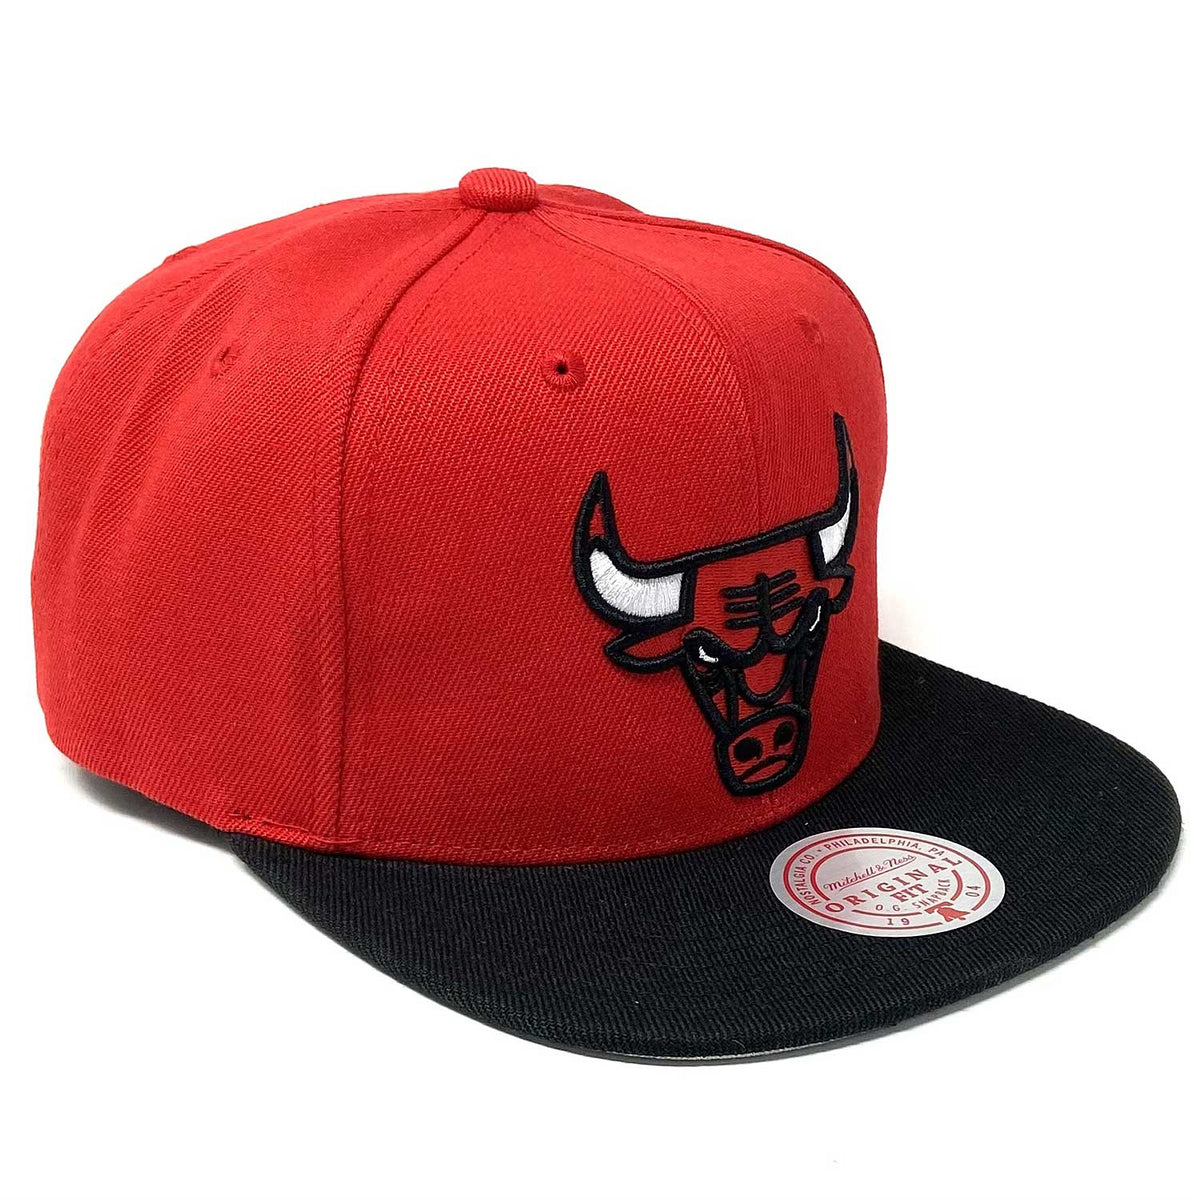 Chicago Bulls Hats, Bulls Caps, Beanie, Snapbacks